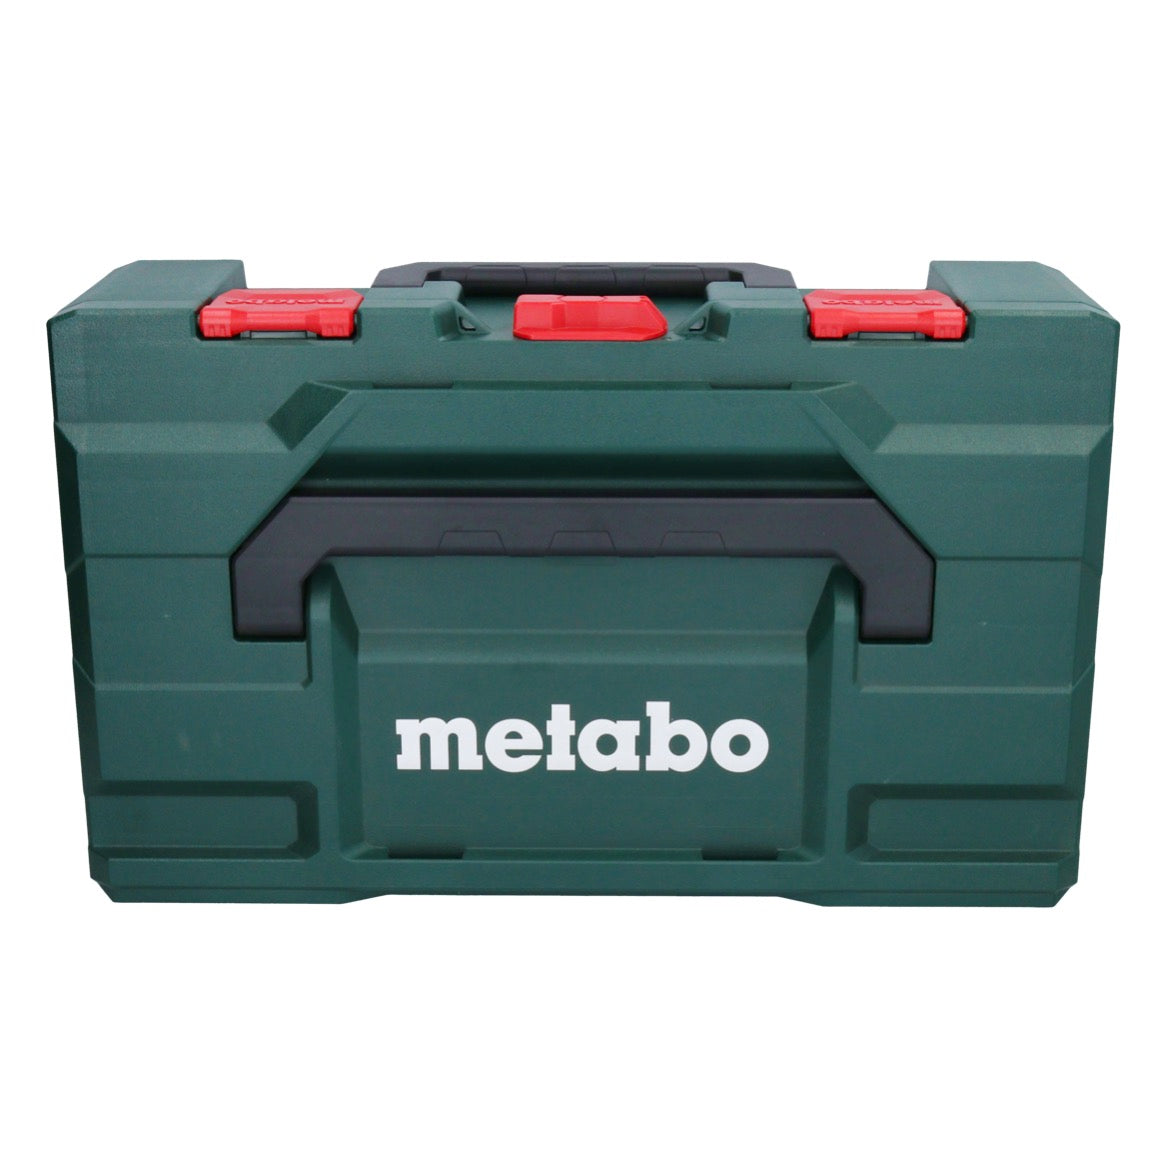 Metabo WVB 18 LTX BL 15-125 Quick Akku Winkelschleifer 18 V 125 mm Brushless + 1x Akku 5,5 Ah + metaBOX - ohne Ladegerät